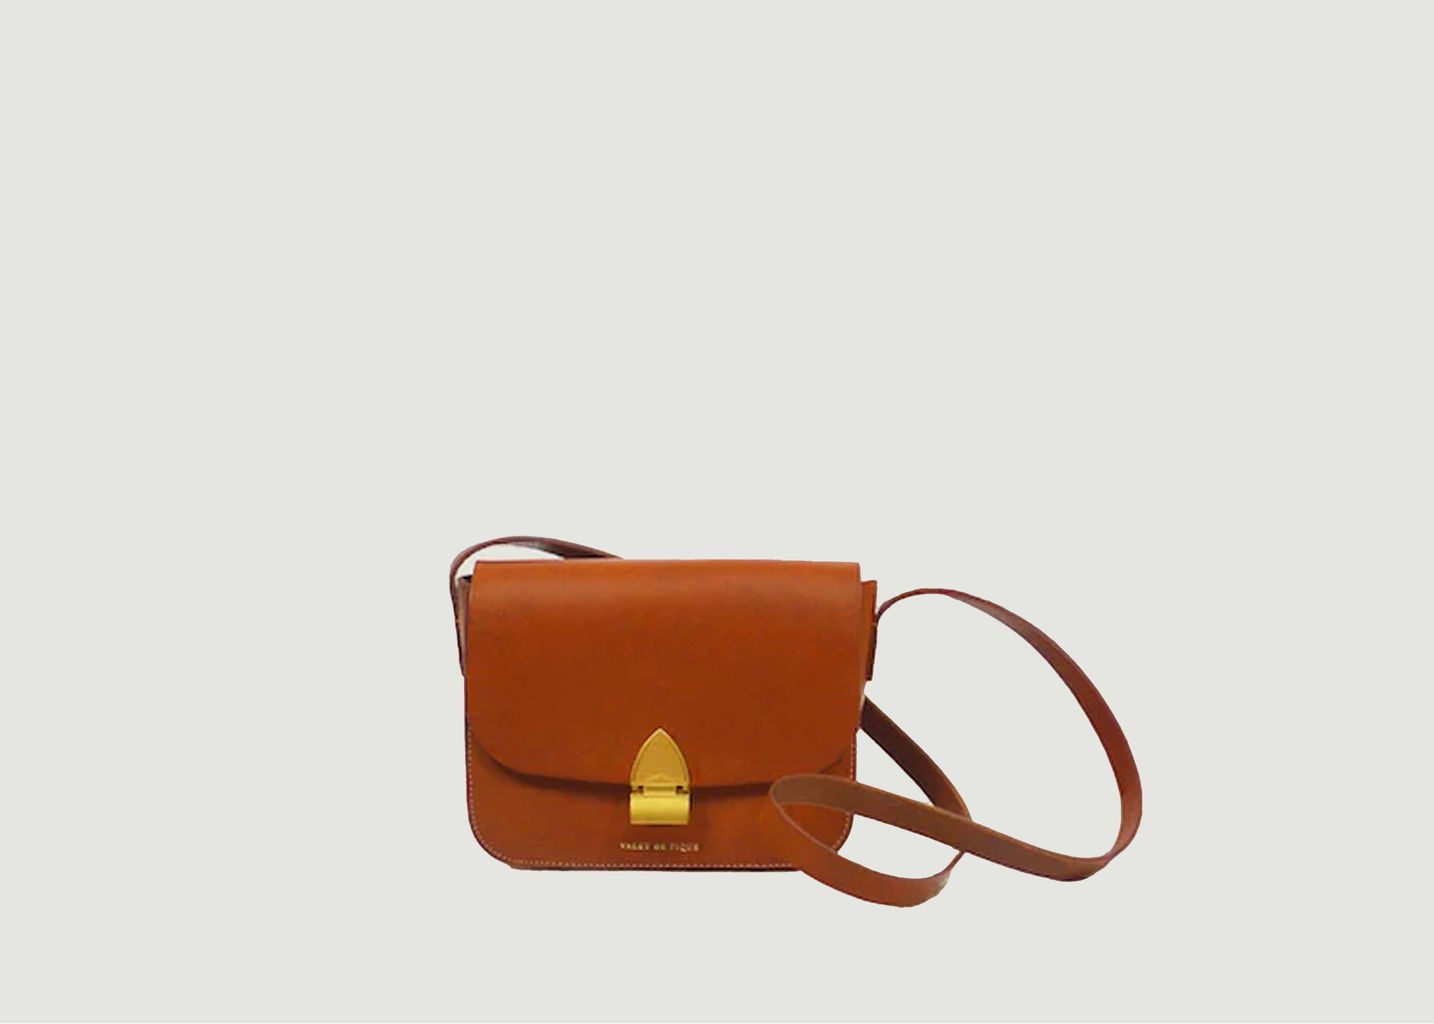 Colette Handbag - Valet de Pique